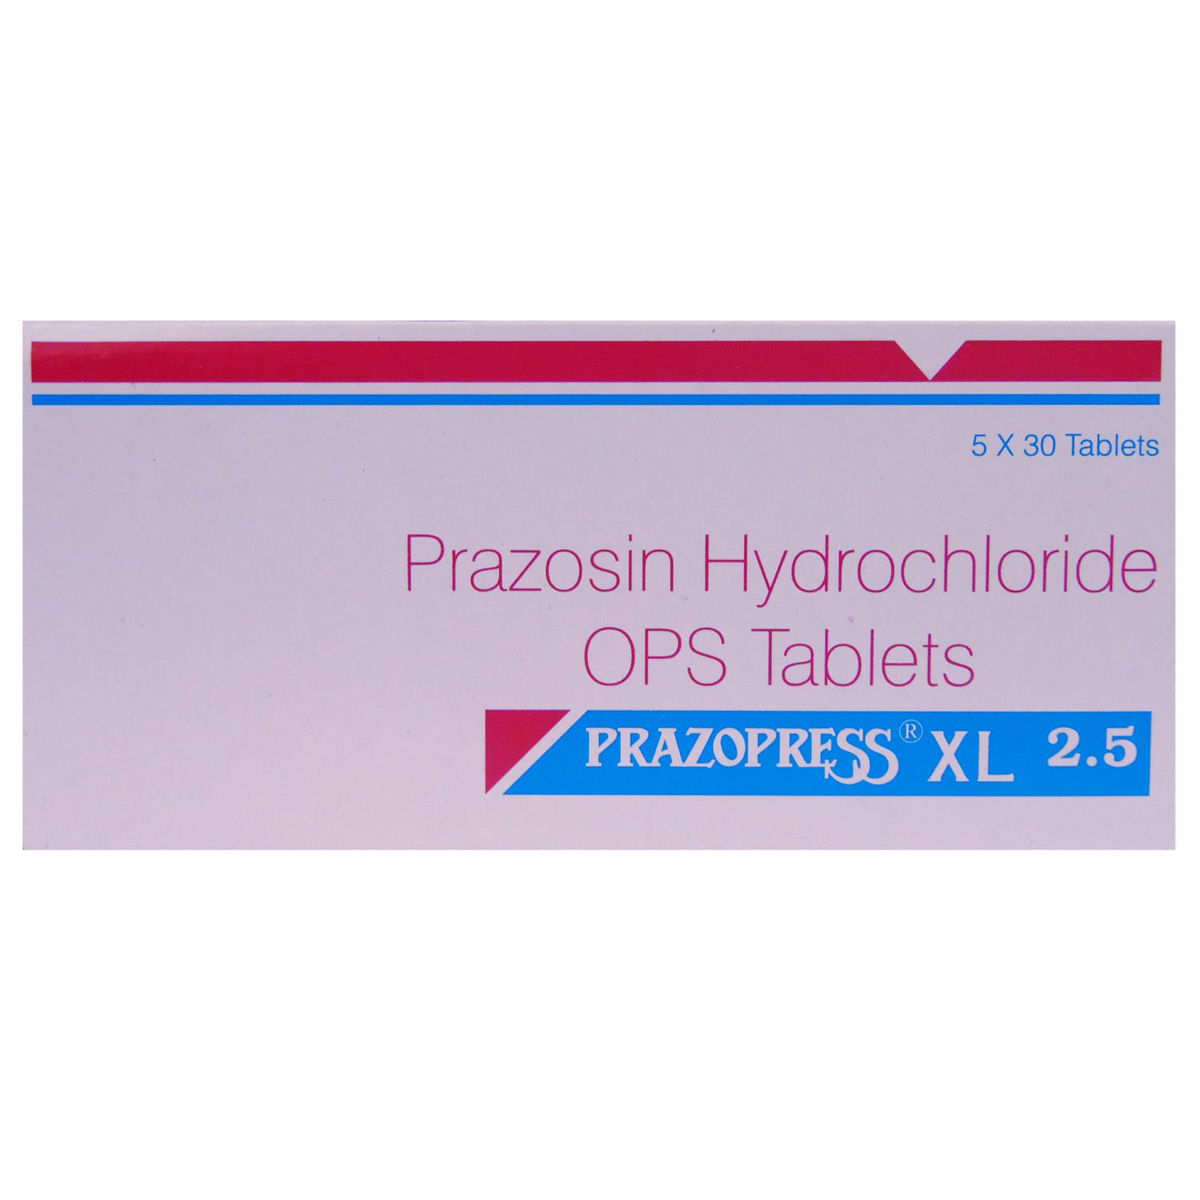 Prazopress XL 2.5 Tablet Uses, Side Effects, Price Apollo Pharmacy